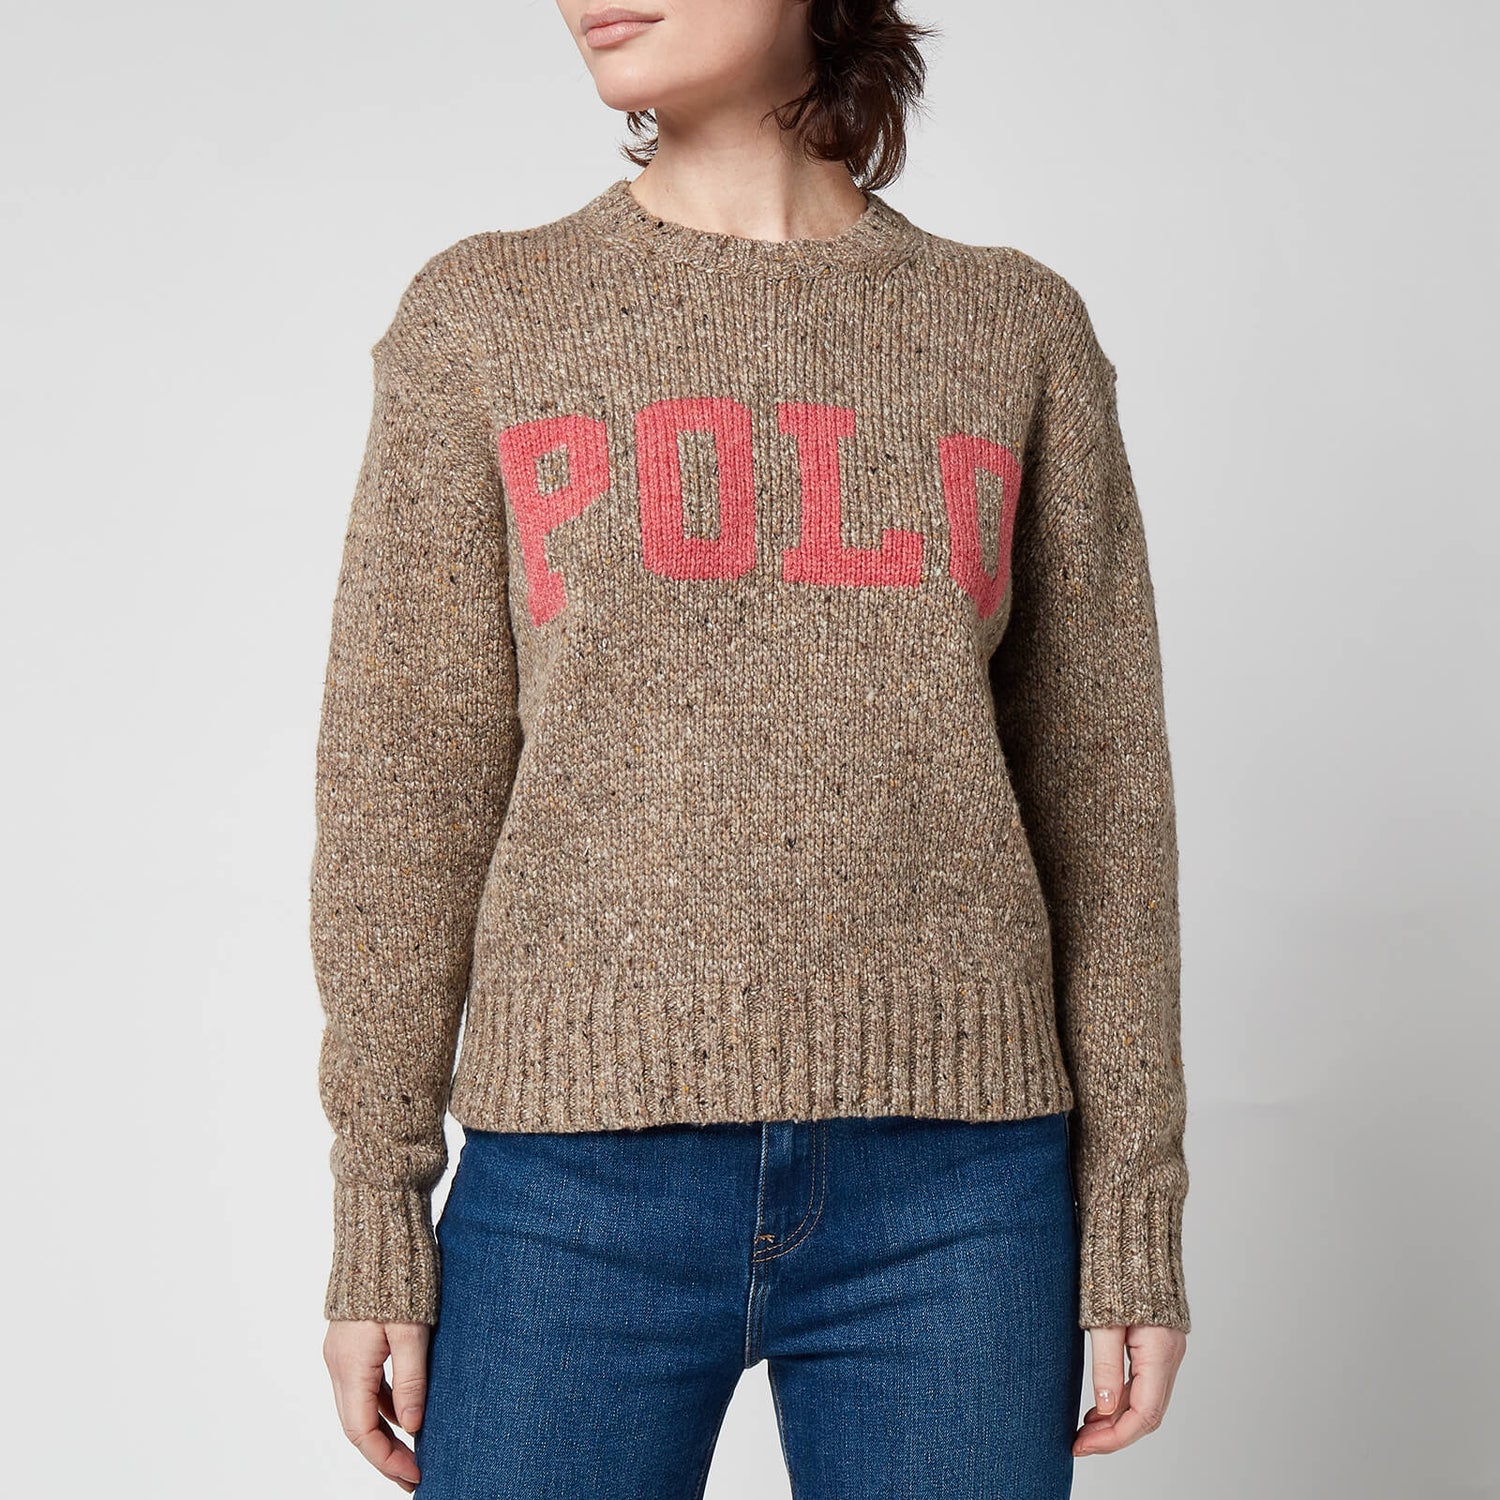 Polo Ralph Lauren Women's Classic Polo Sweatshirt - Tan/Pink Multi